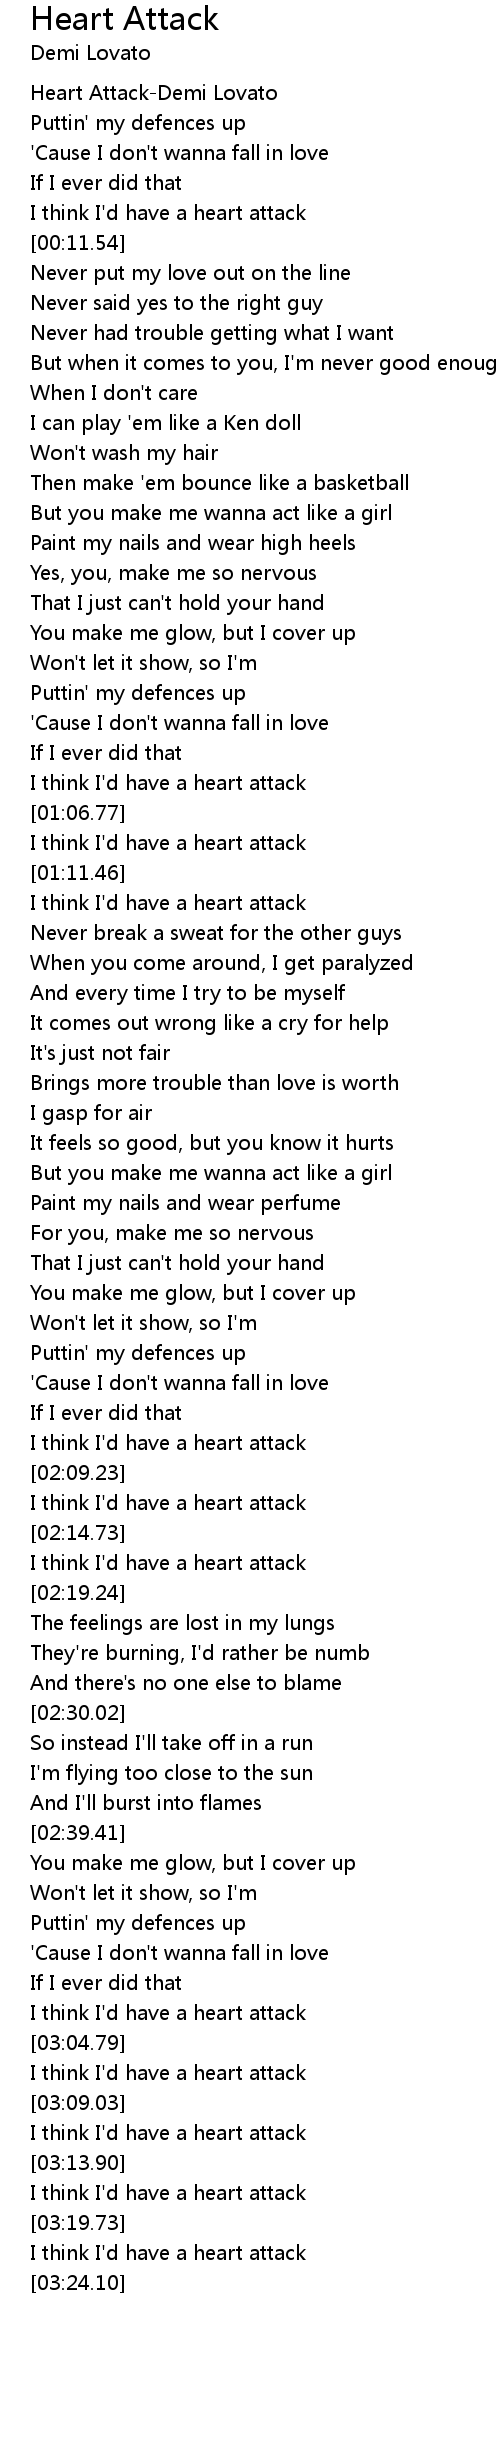 Lyrics demi lovato heart attack Heart Attack